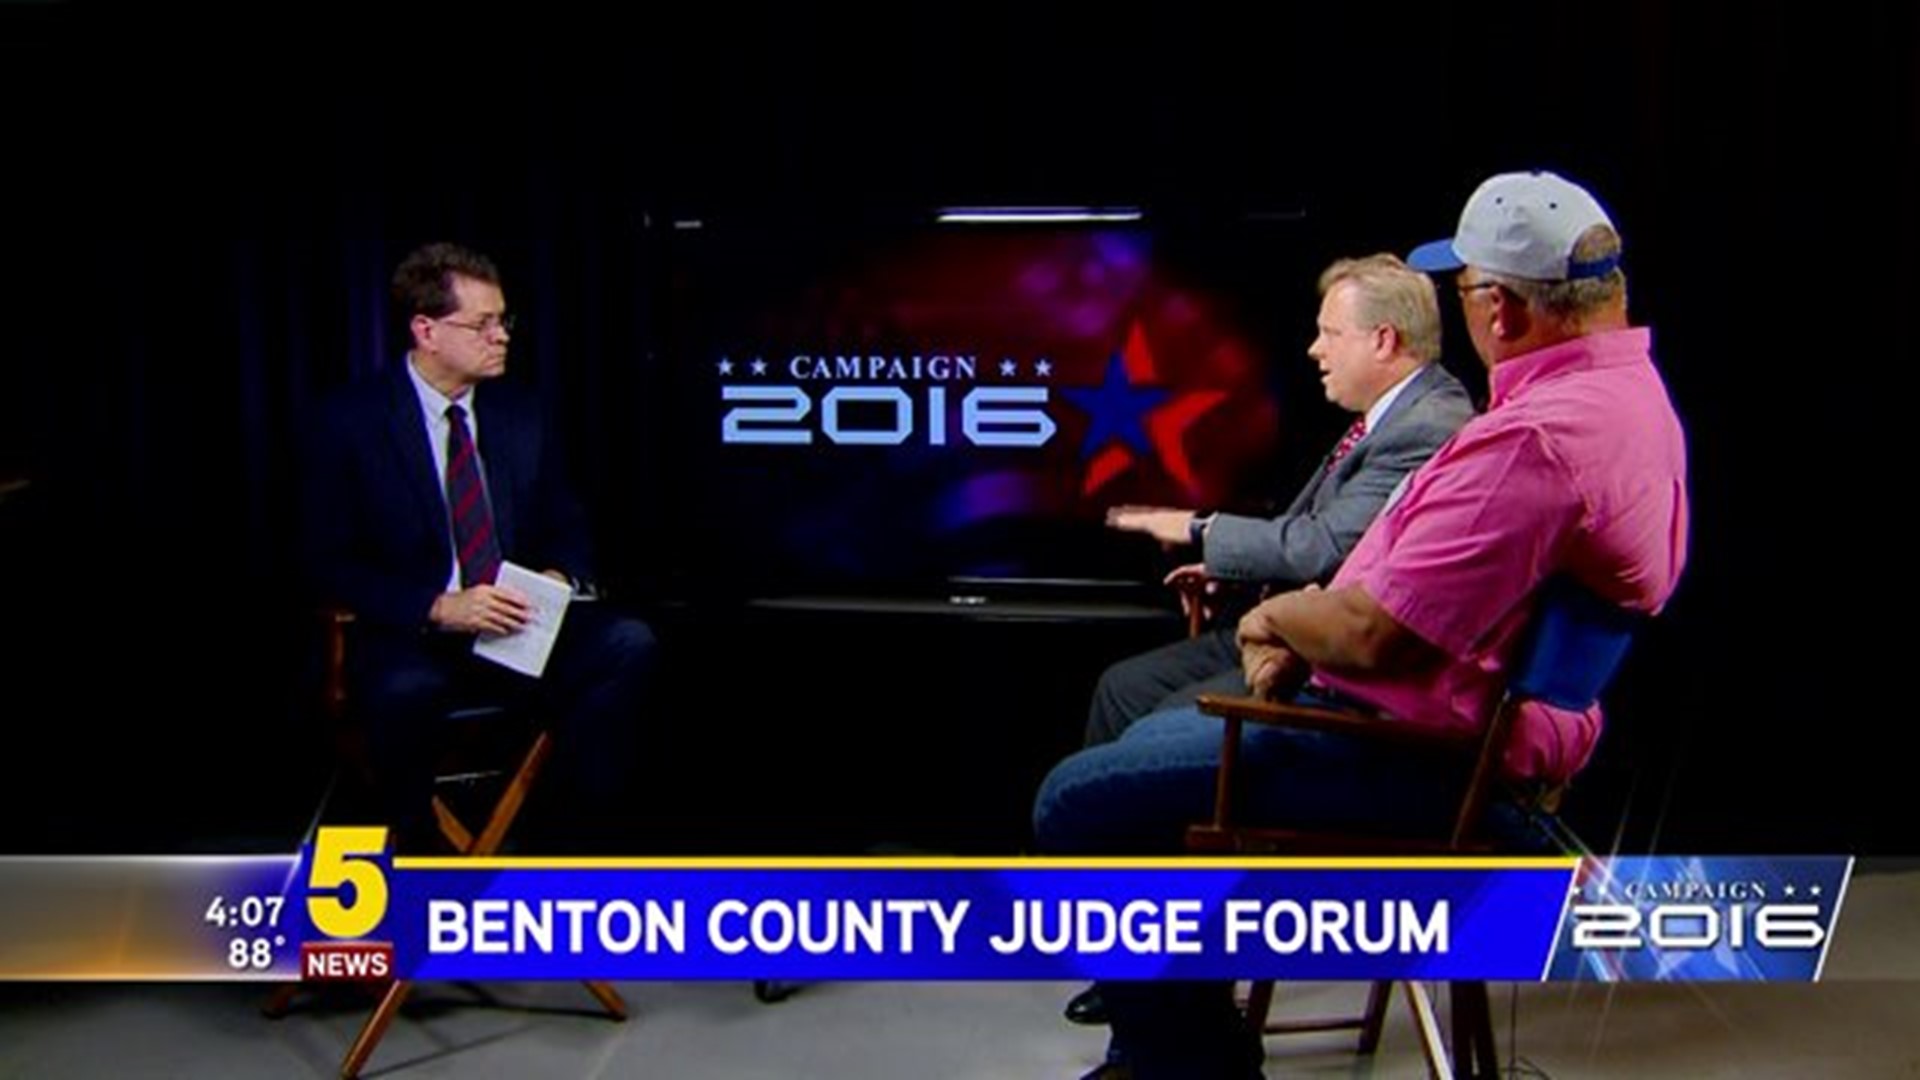 Benton County Judge Forum Part 1